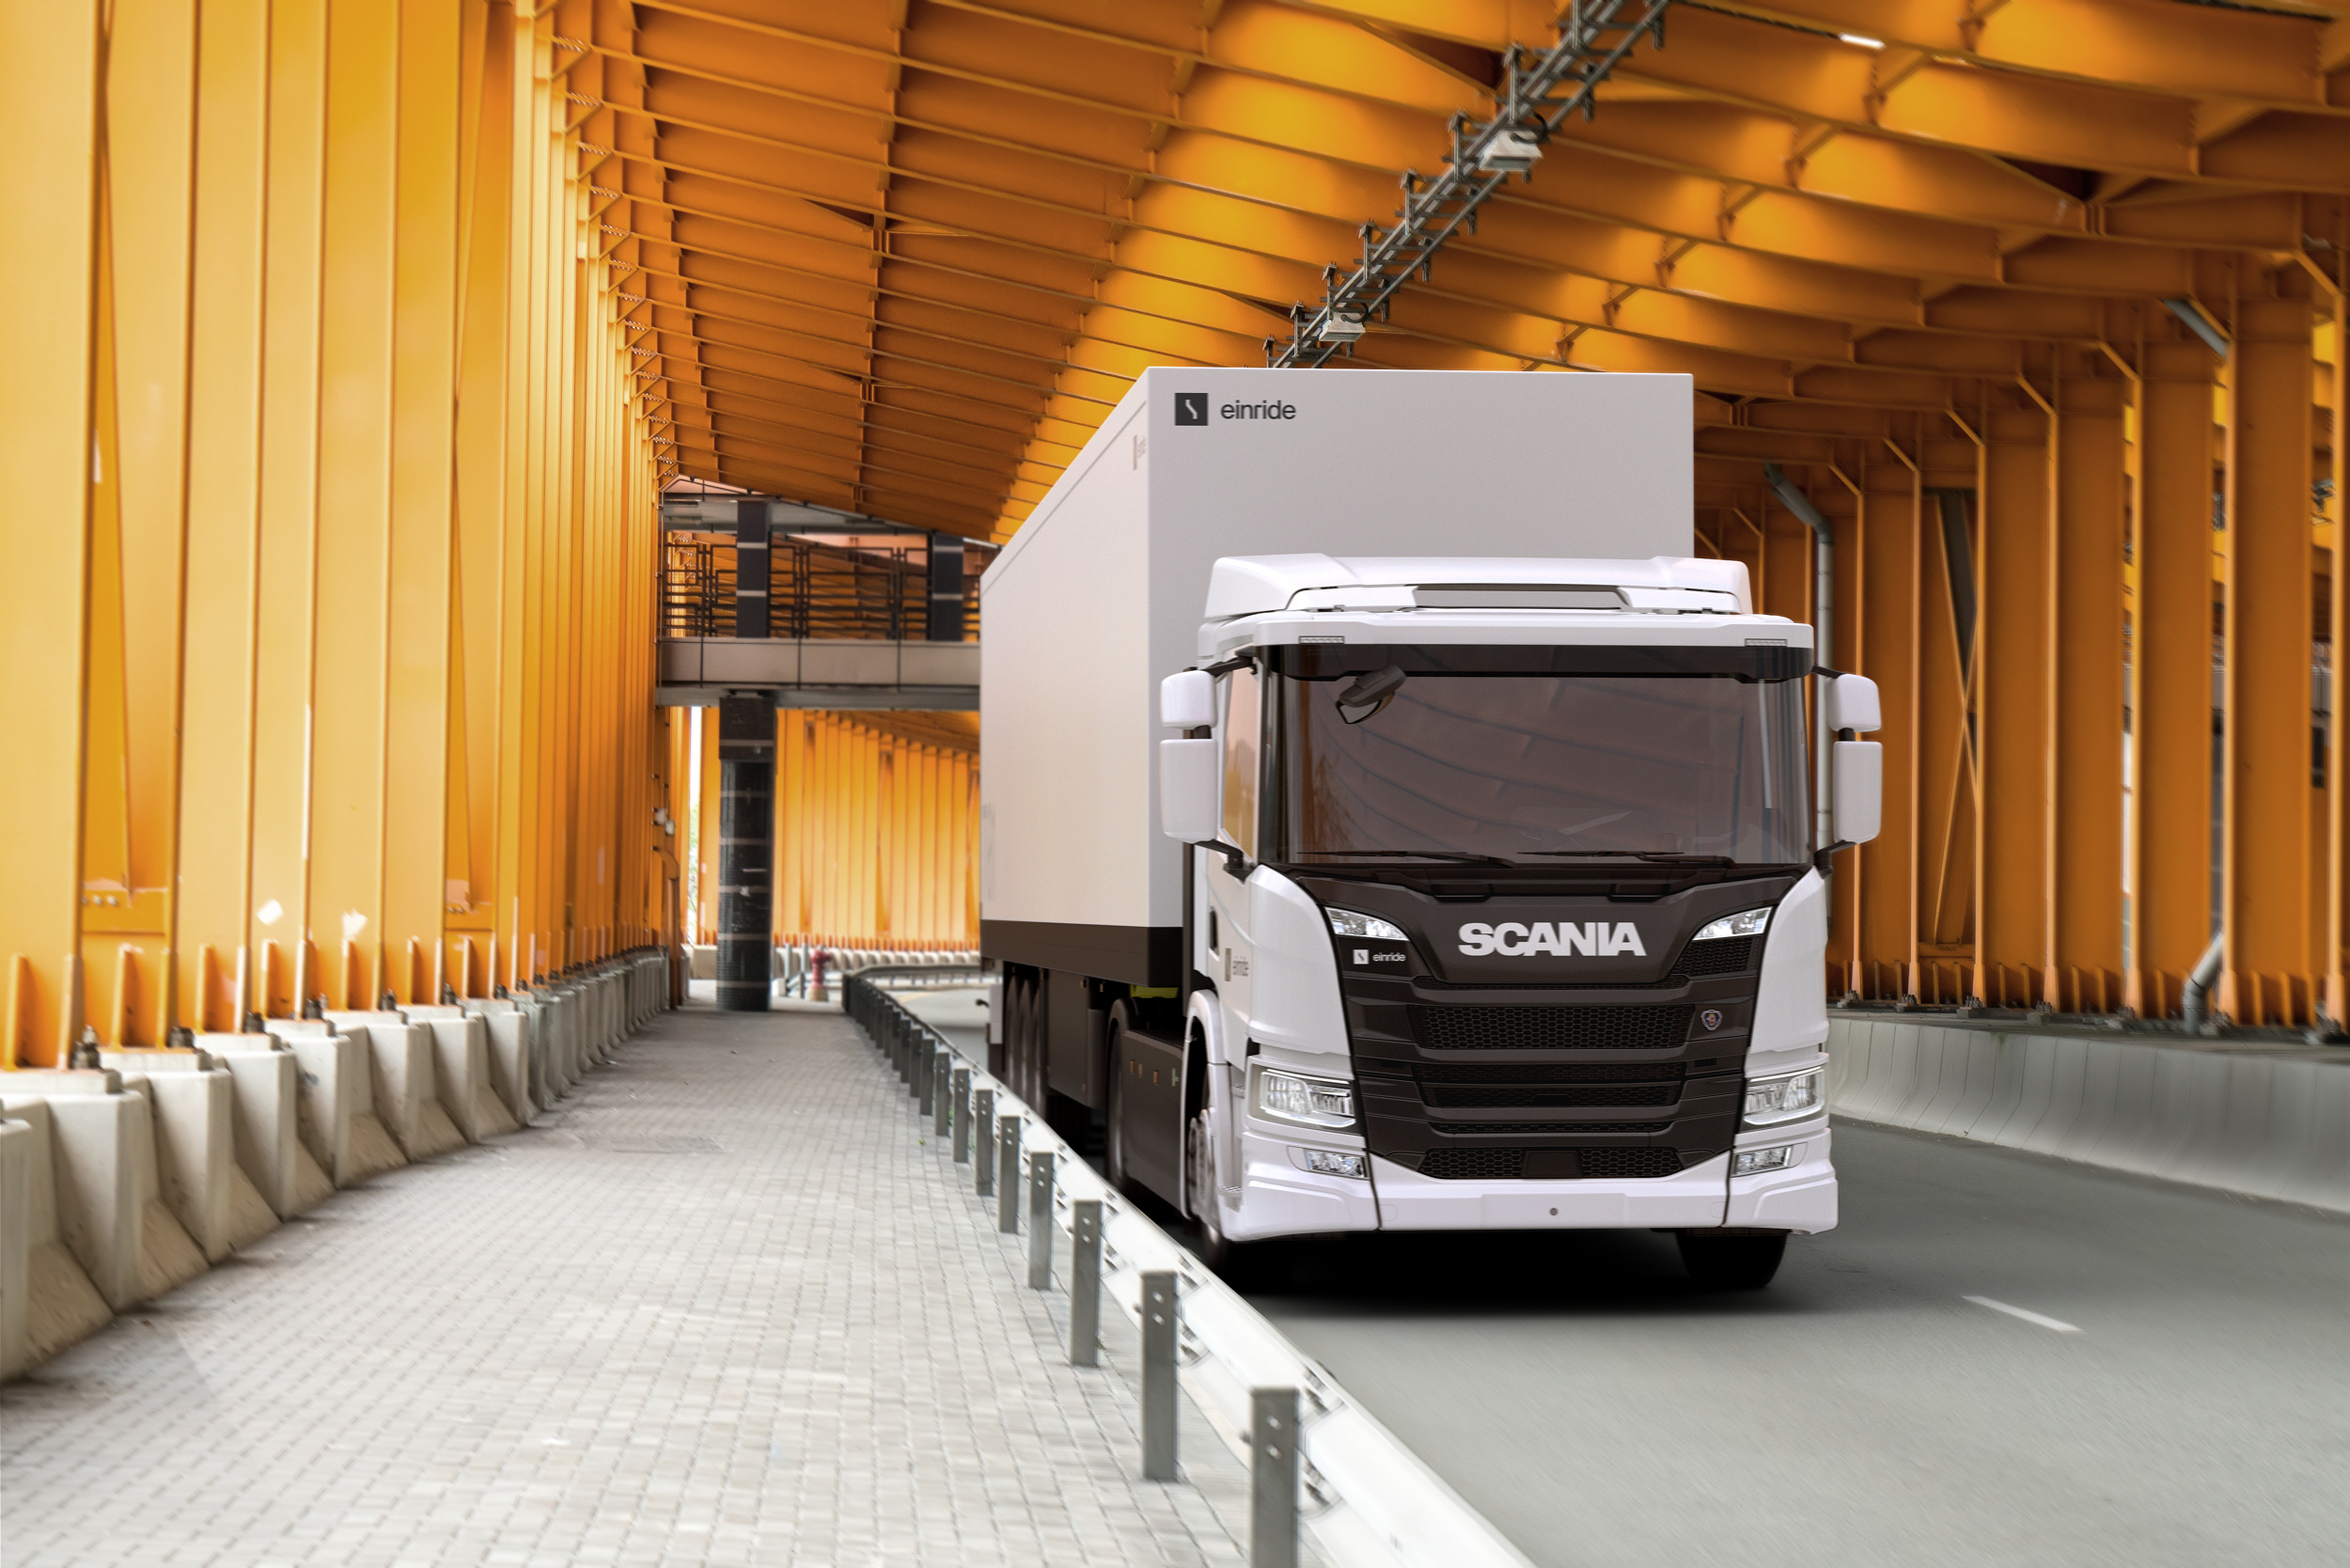 Einride strikes fleet deal for 110 Scania electric trucks | Truck News 2500x1670